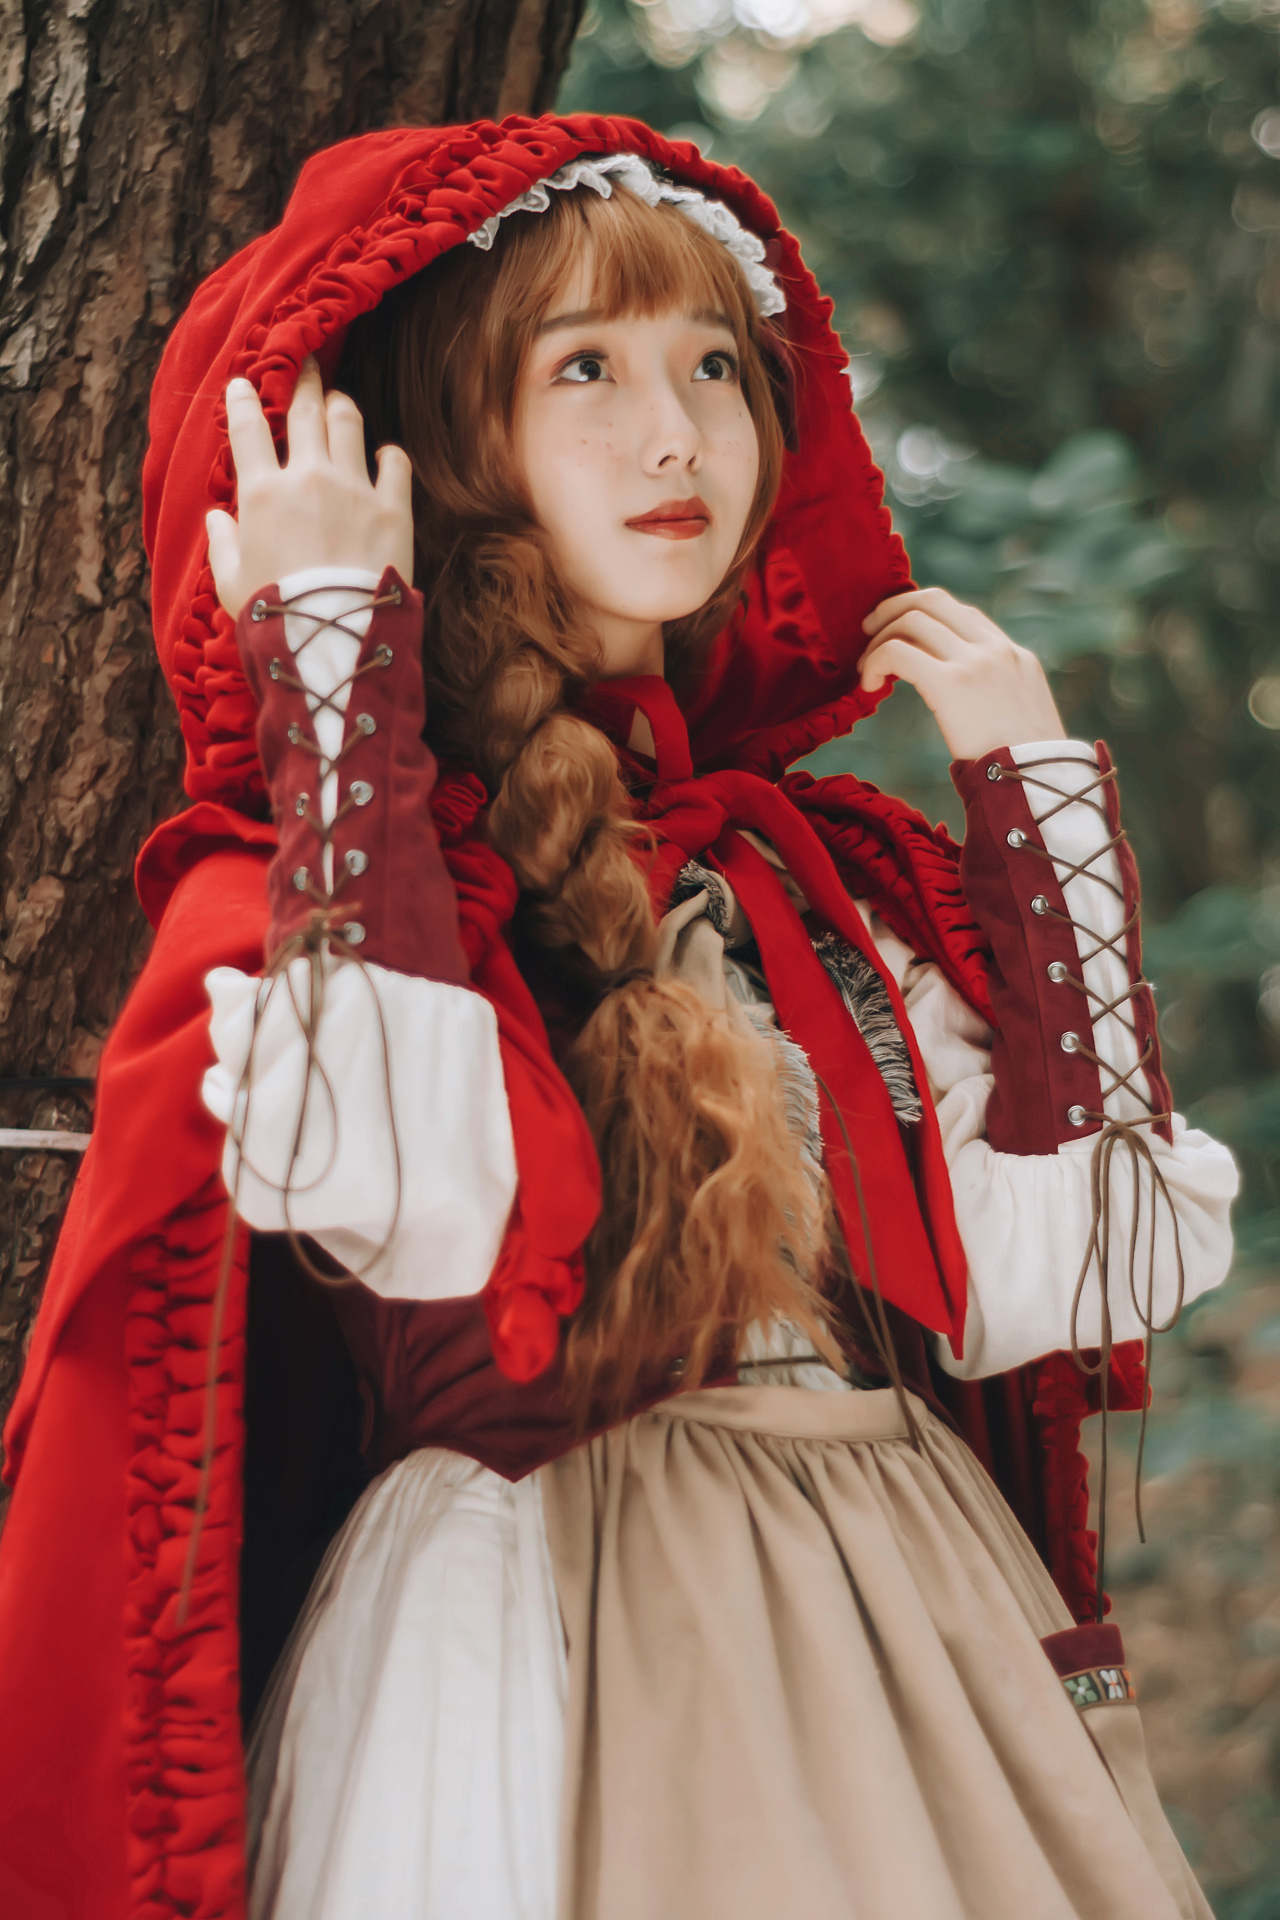 est100 一些攝影(some photos): Red Riding Hood, Amanda Seyfried. 小红帽/ 血紅帽, 亞曼達塞佛瑞